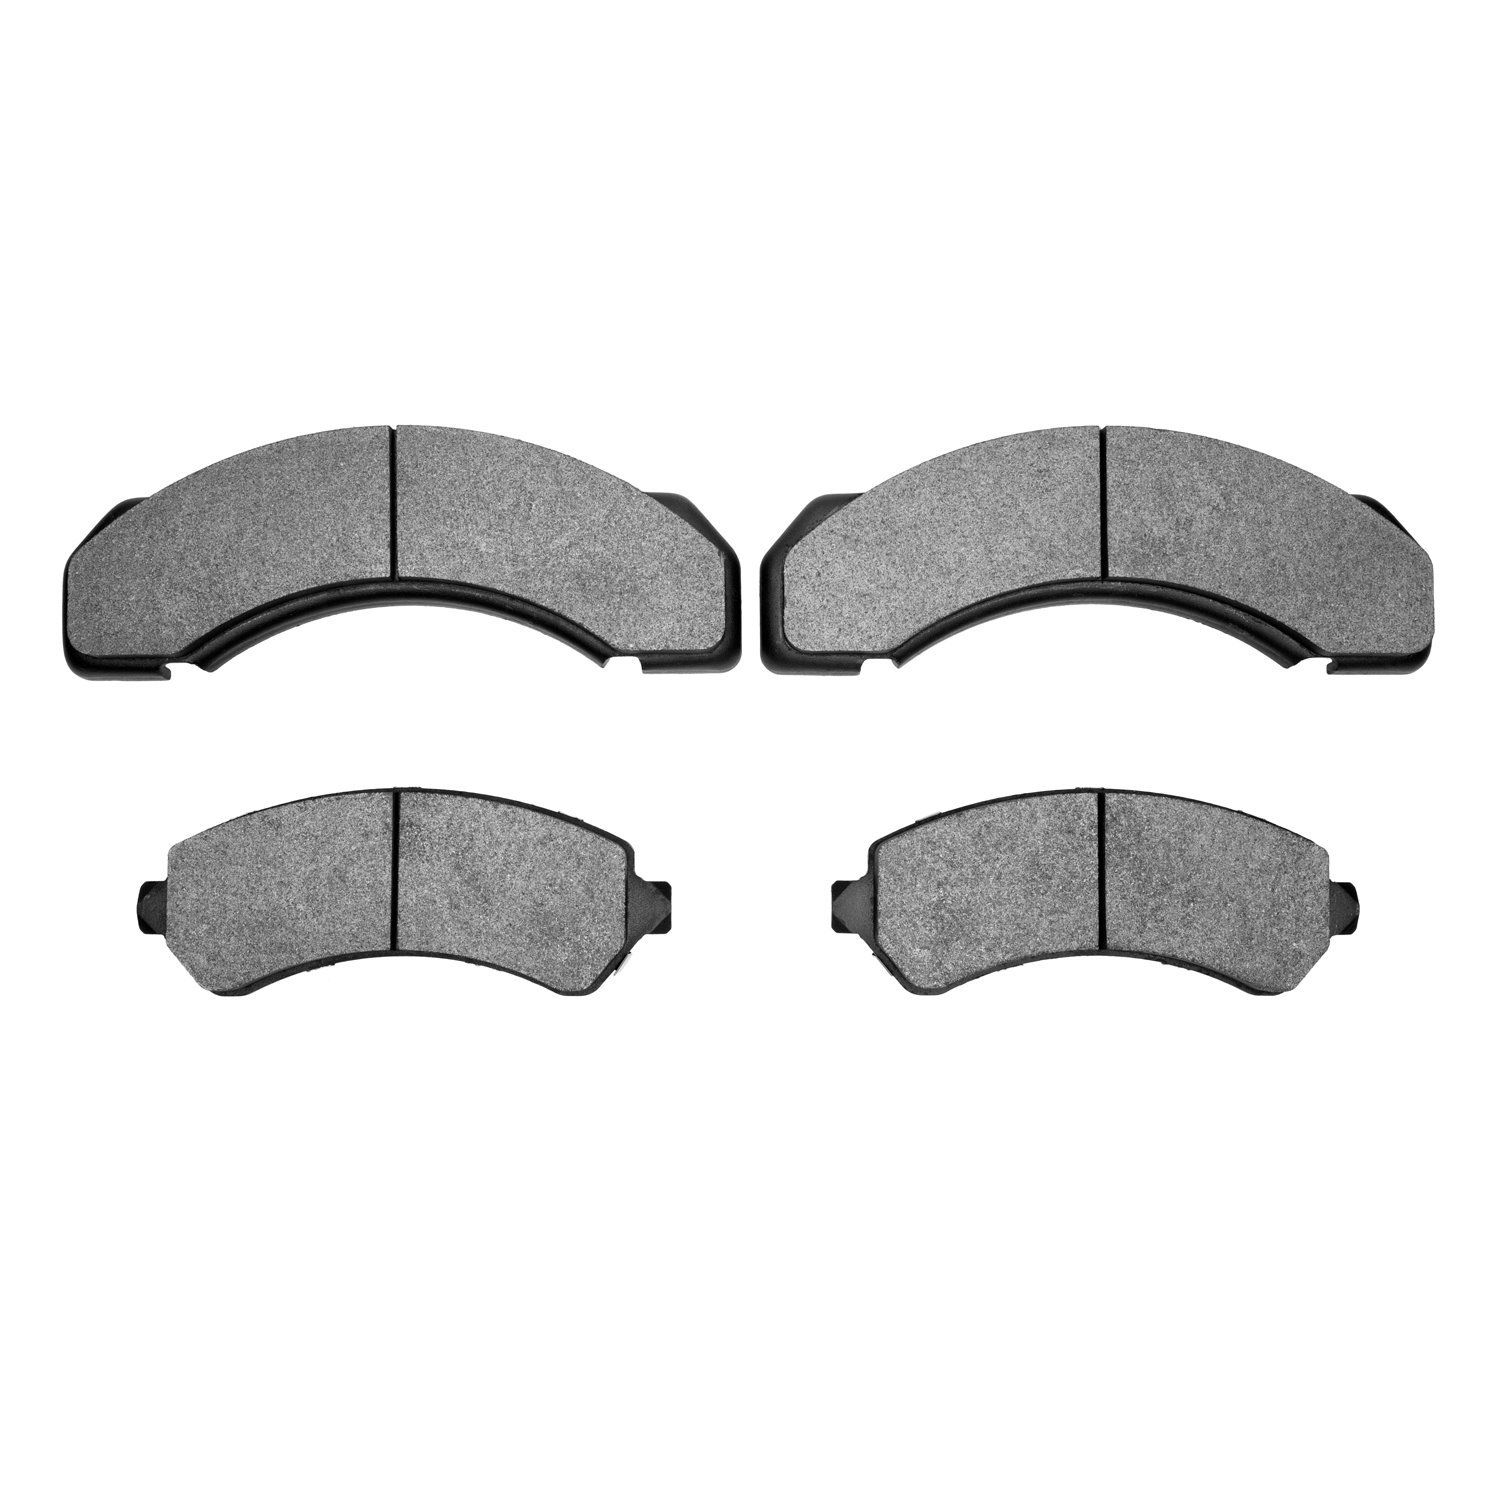 1311-0717-00 3000-Series Semi-Metallic Brake Pads, 1973-2012 Multiple Makes/Models, Position: Front,Fr & Rr,Fr,Rear,Rr